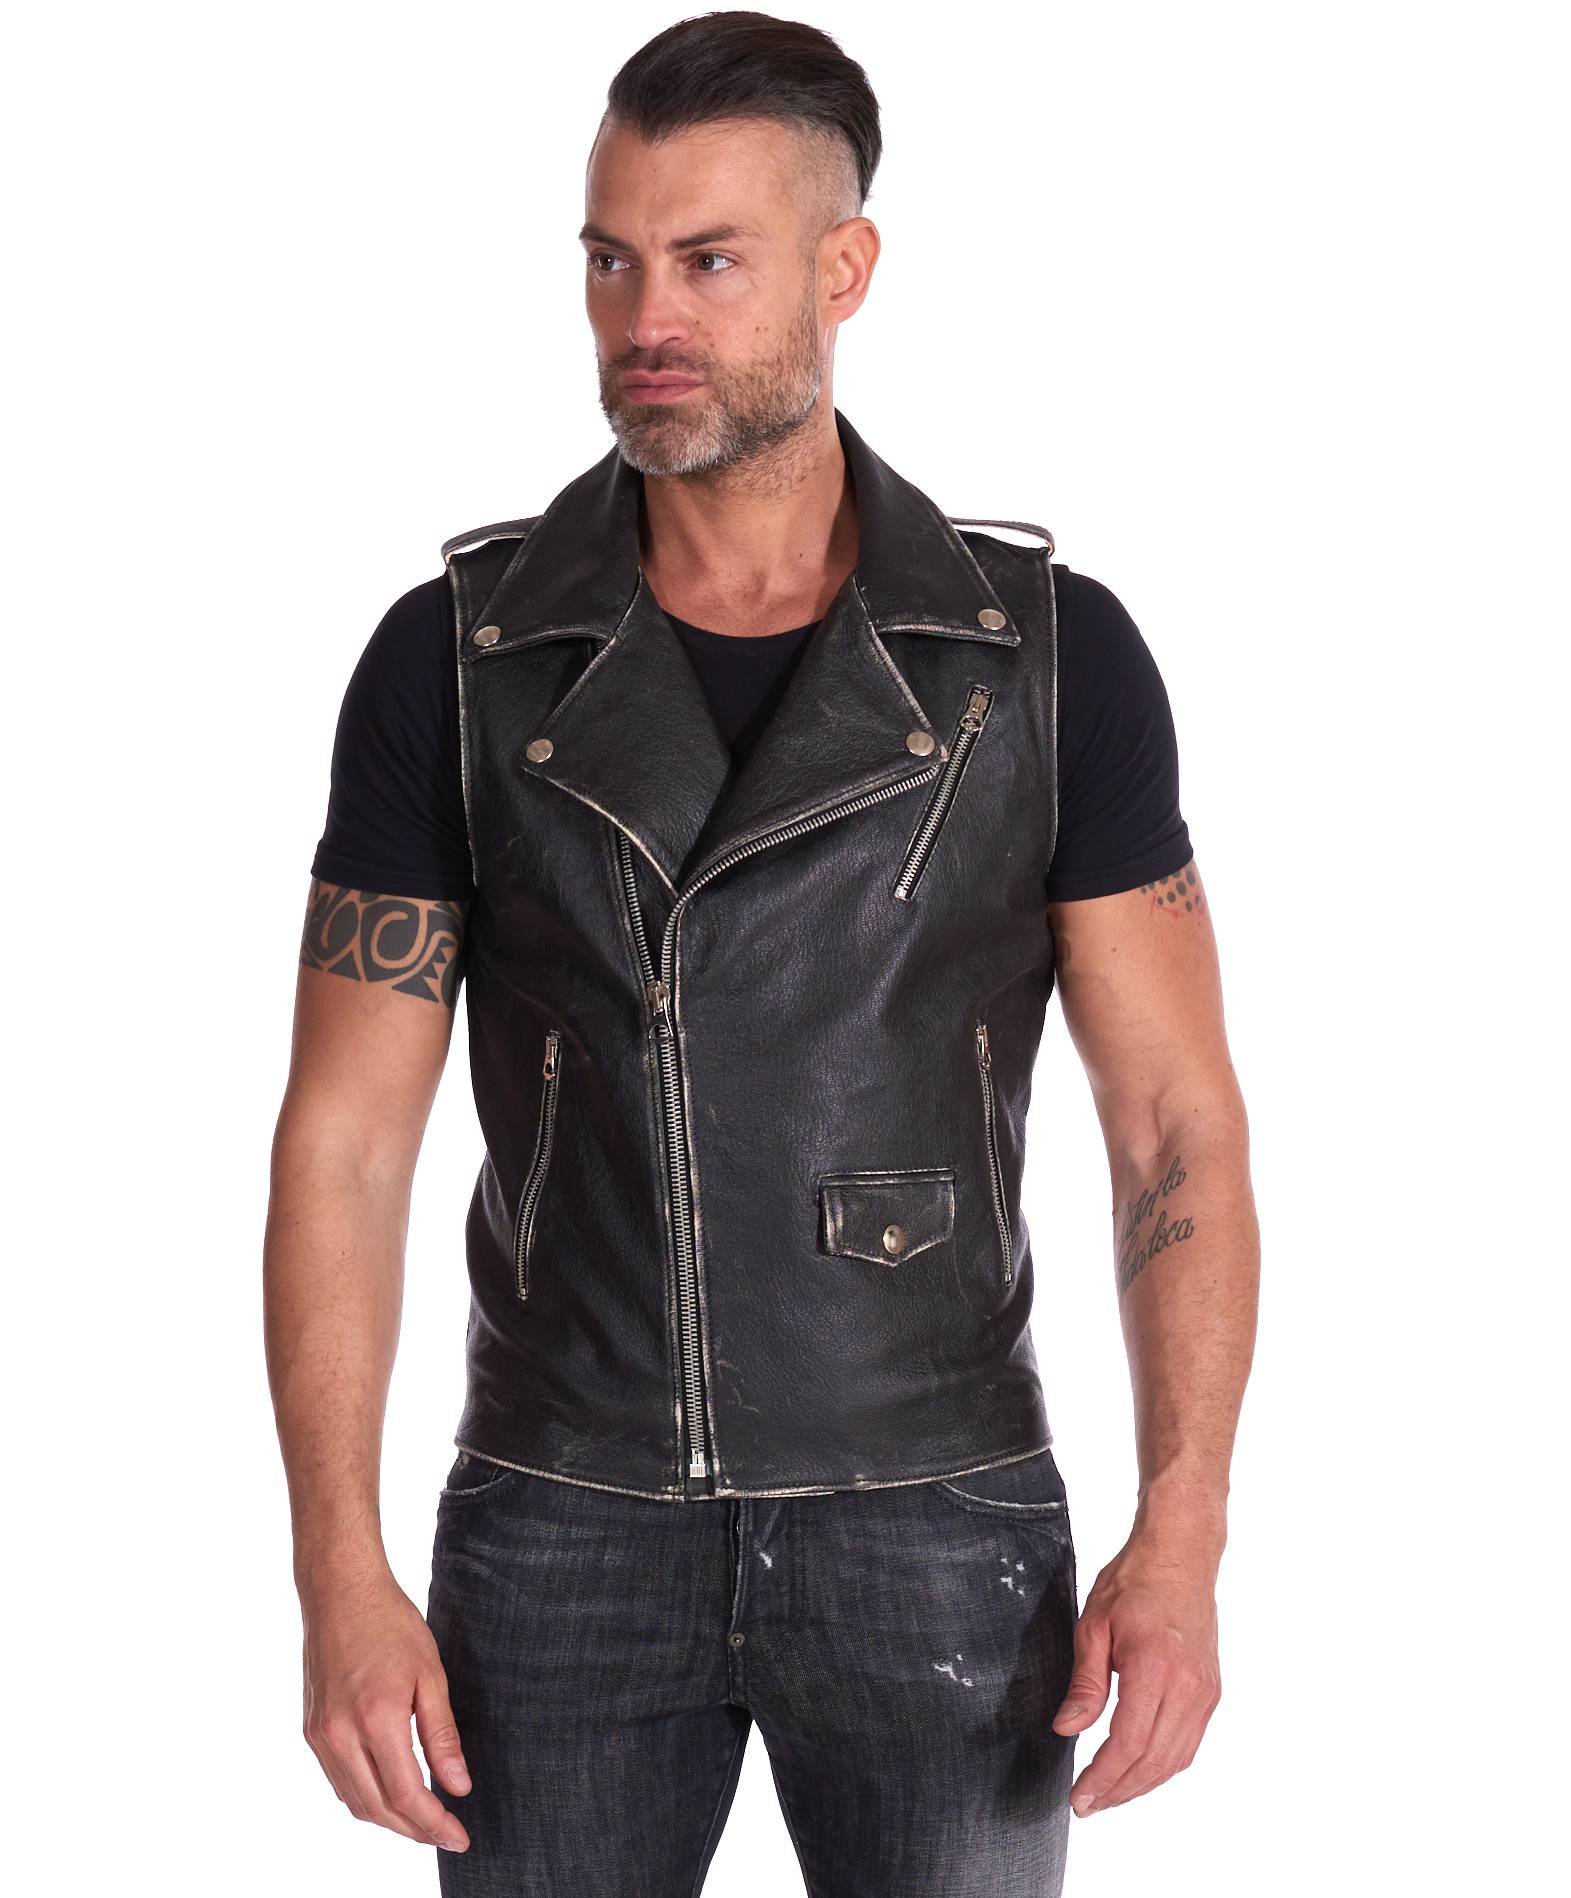 Sleeveless leather jacket sleeveless biker jacket vest black Ermal